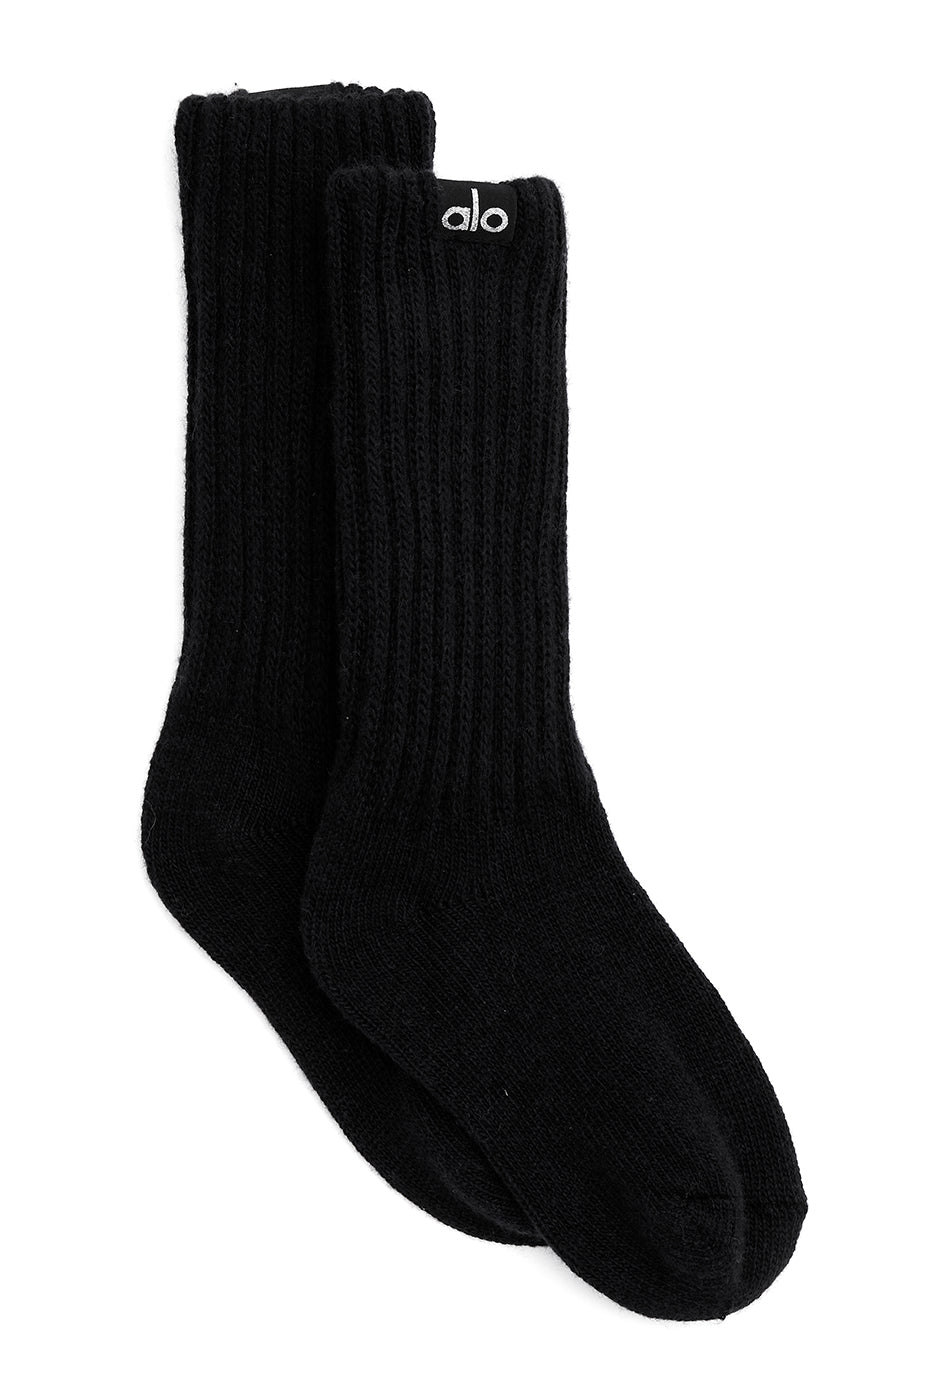 Alo yoga pivot barre socks size Small (fits size 5-7.5) brand new